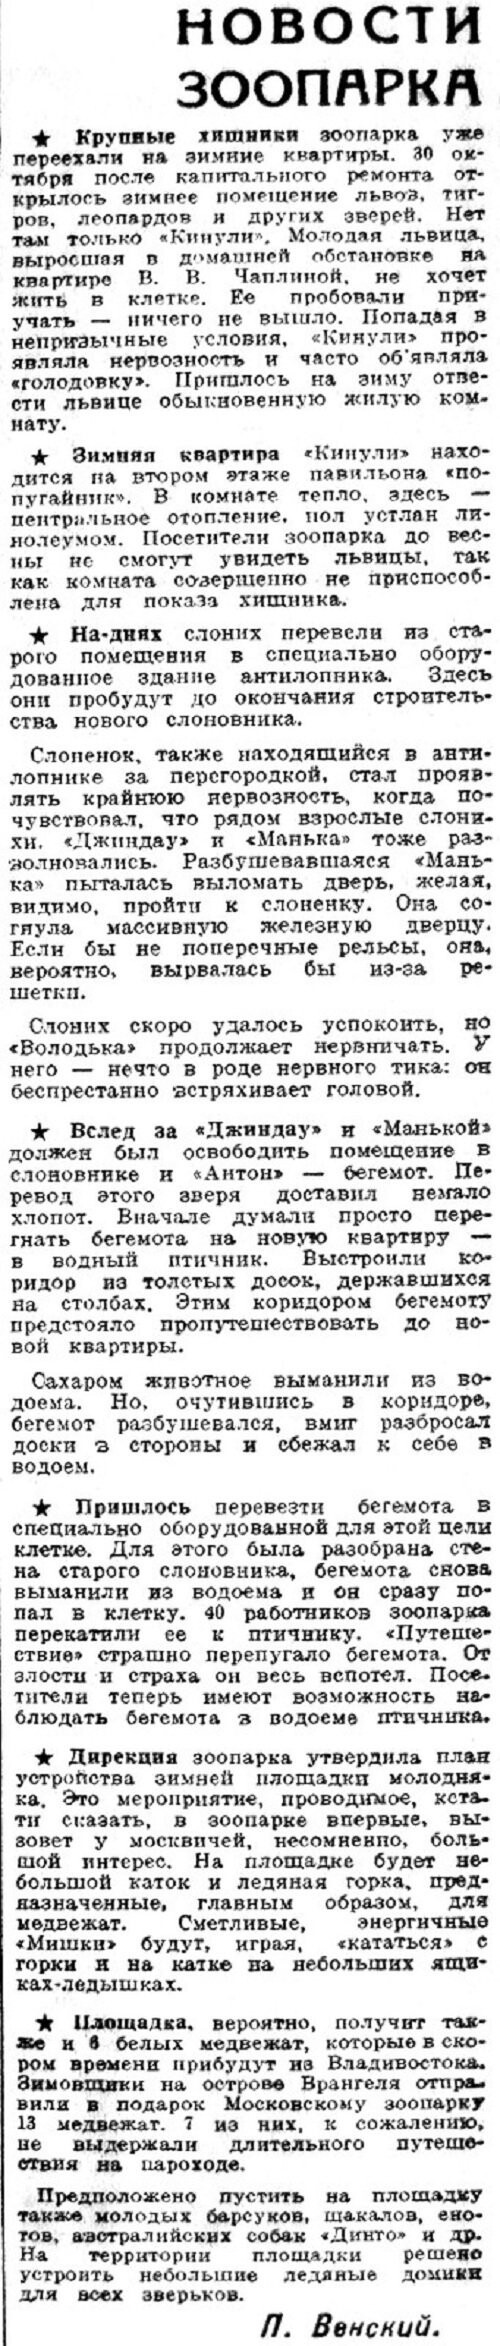 «Вечерняя Москва», 3 ноября 1936 г.